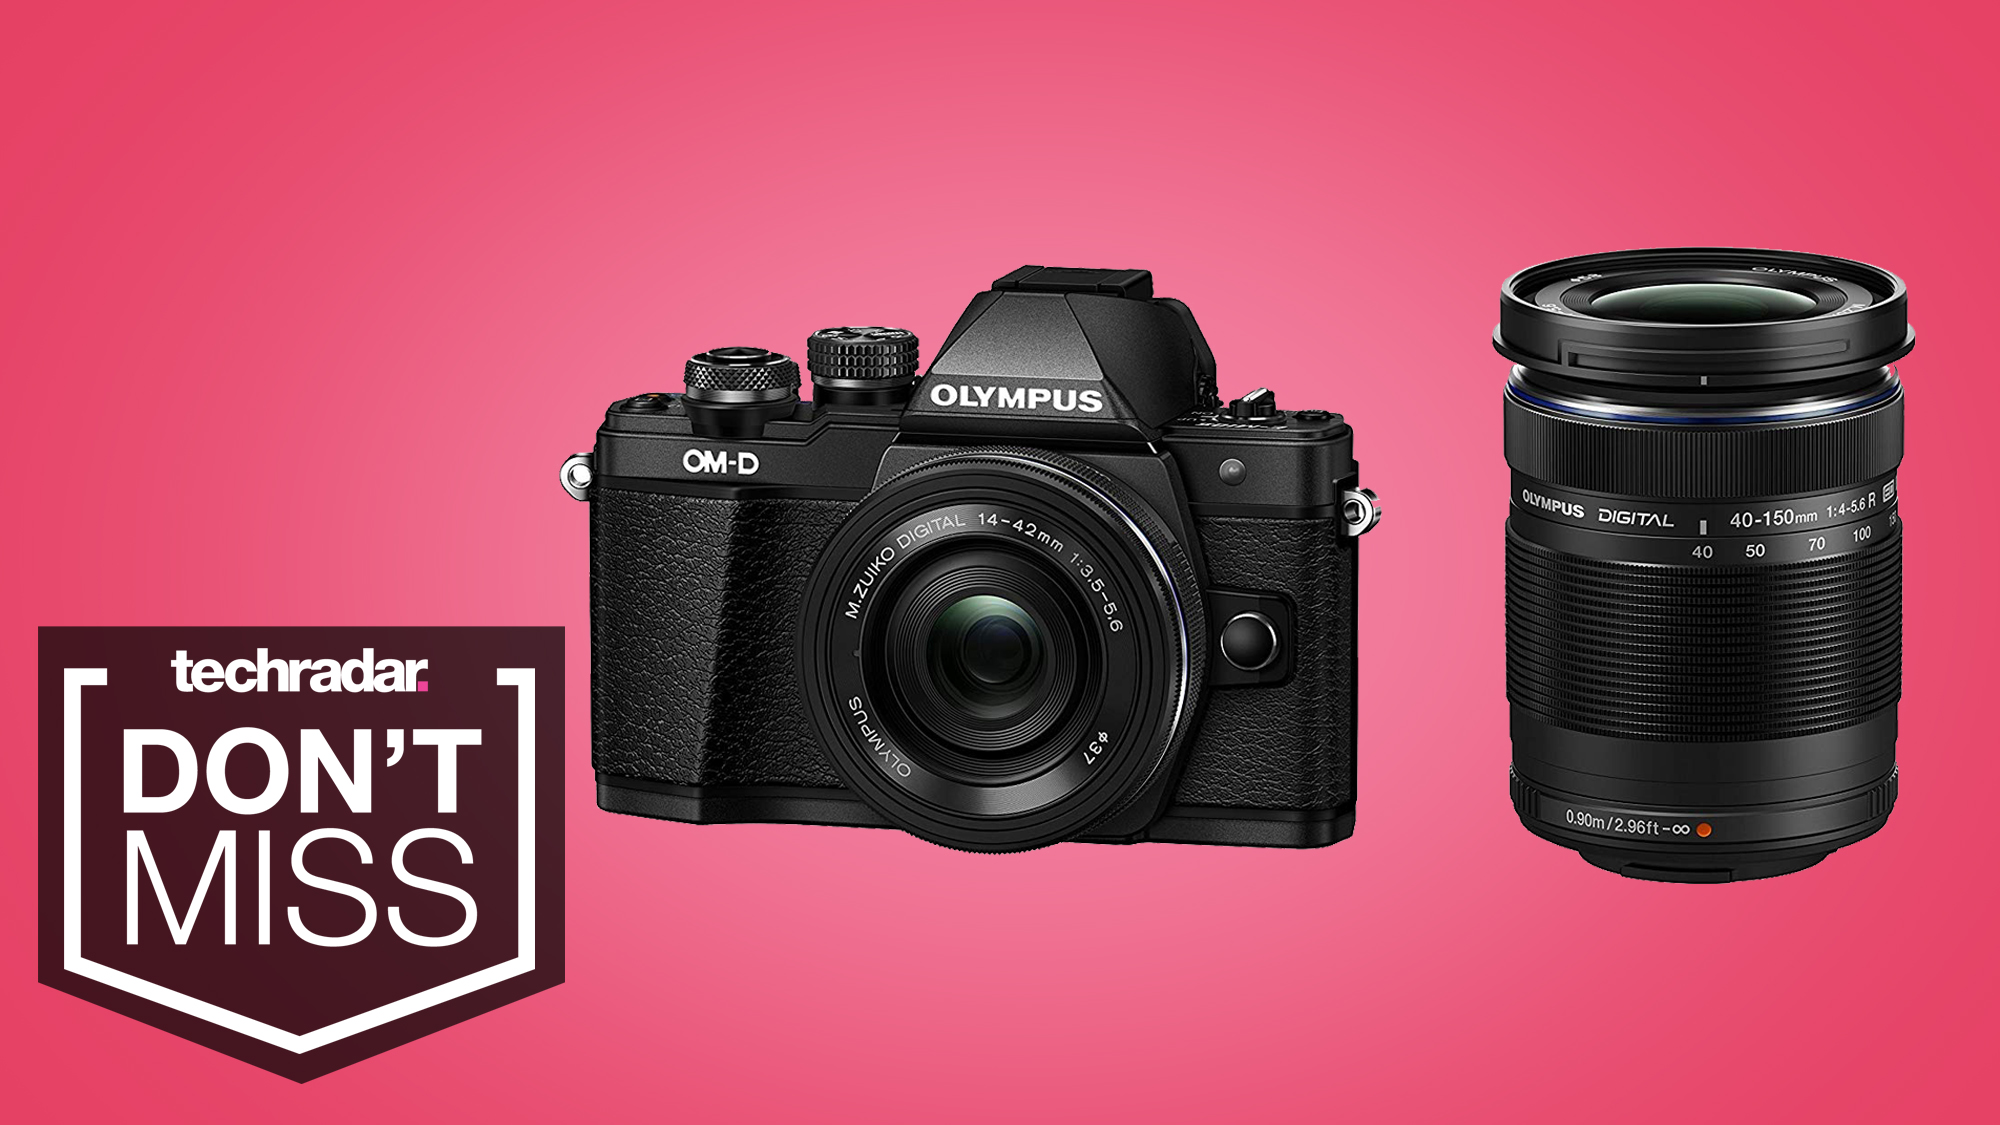 This Olympus OM-D E-M10 Mark II bundle is Black Friday's best camera deal so far